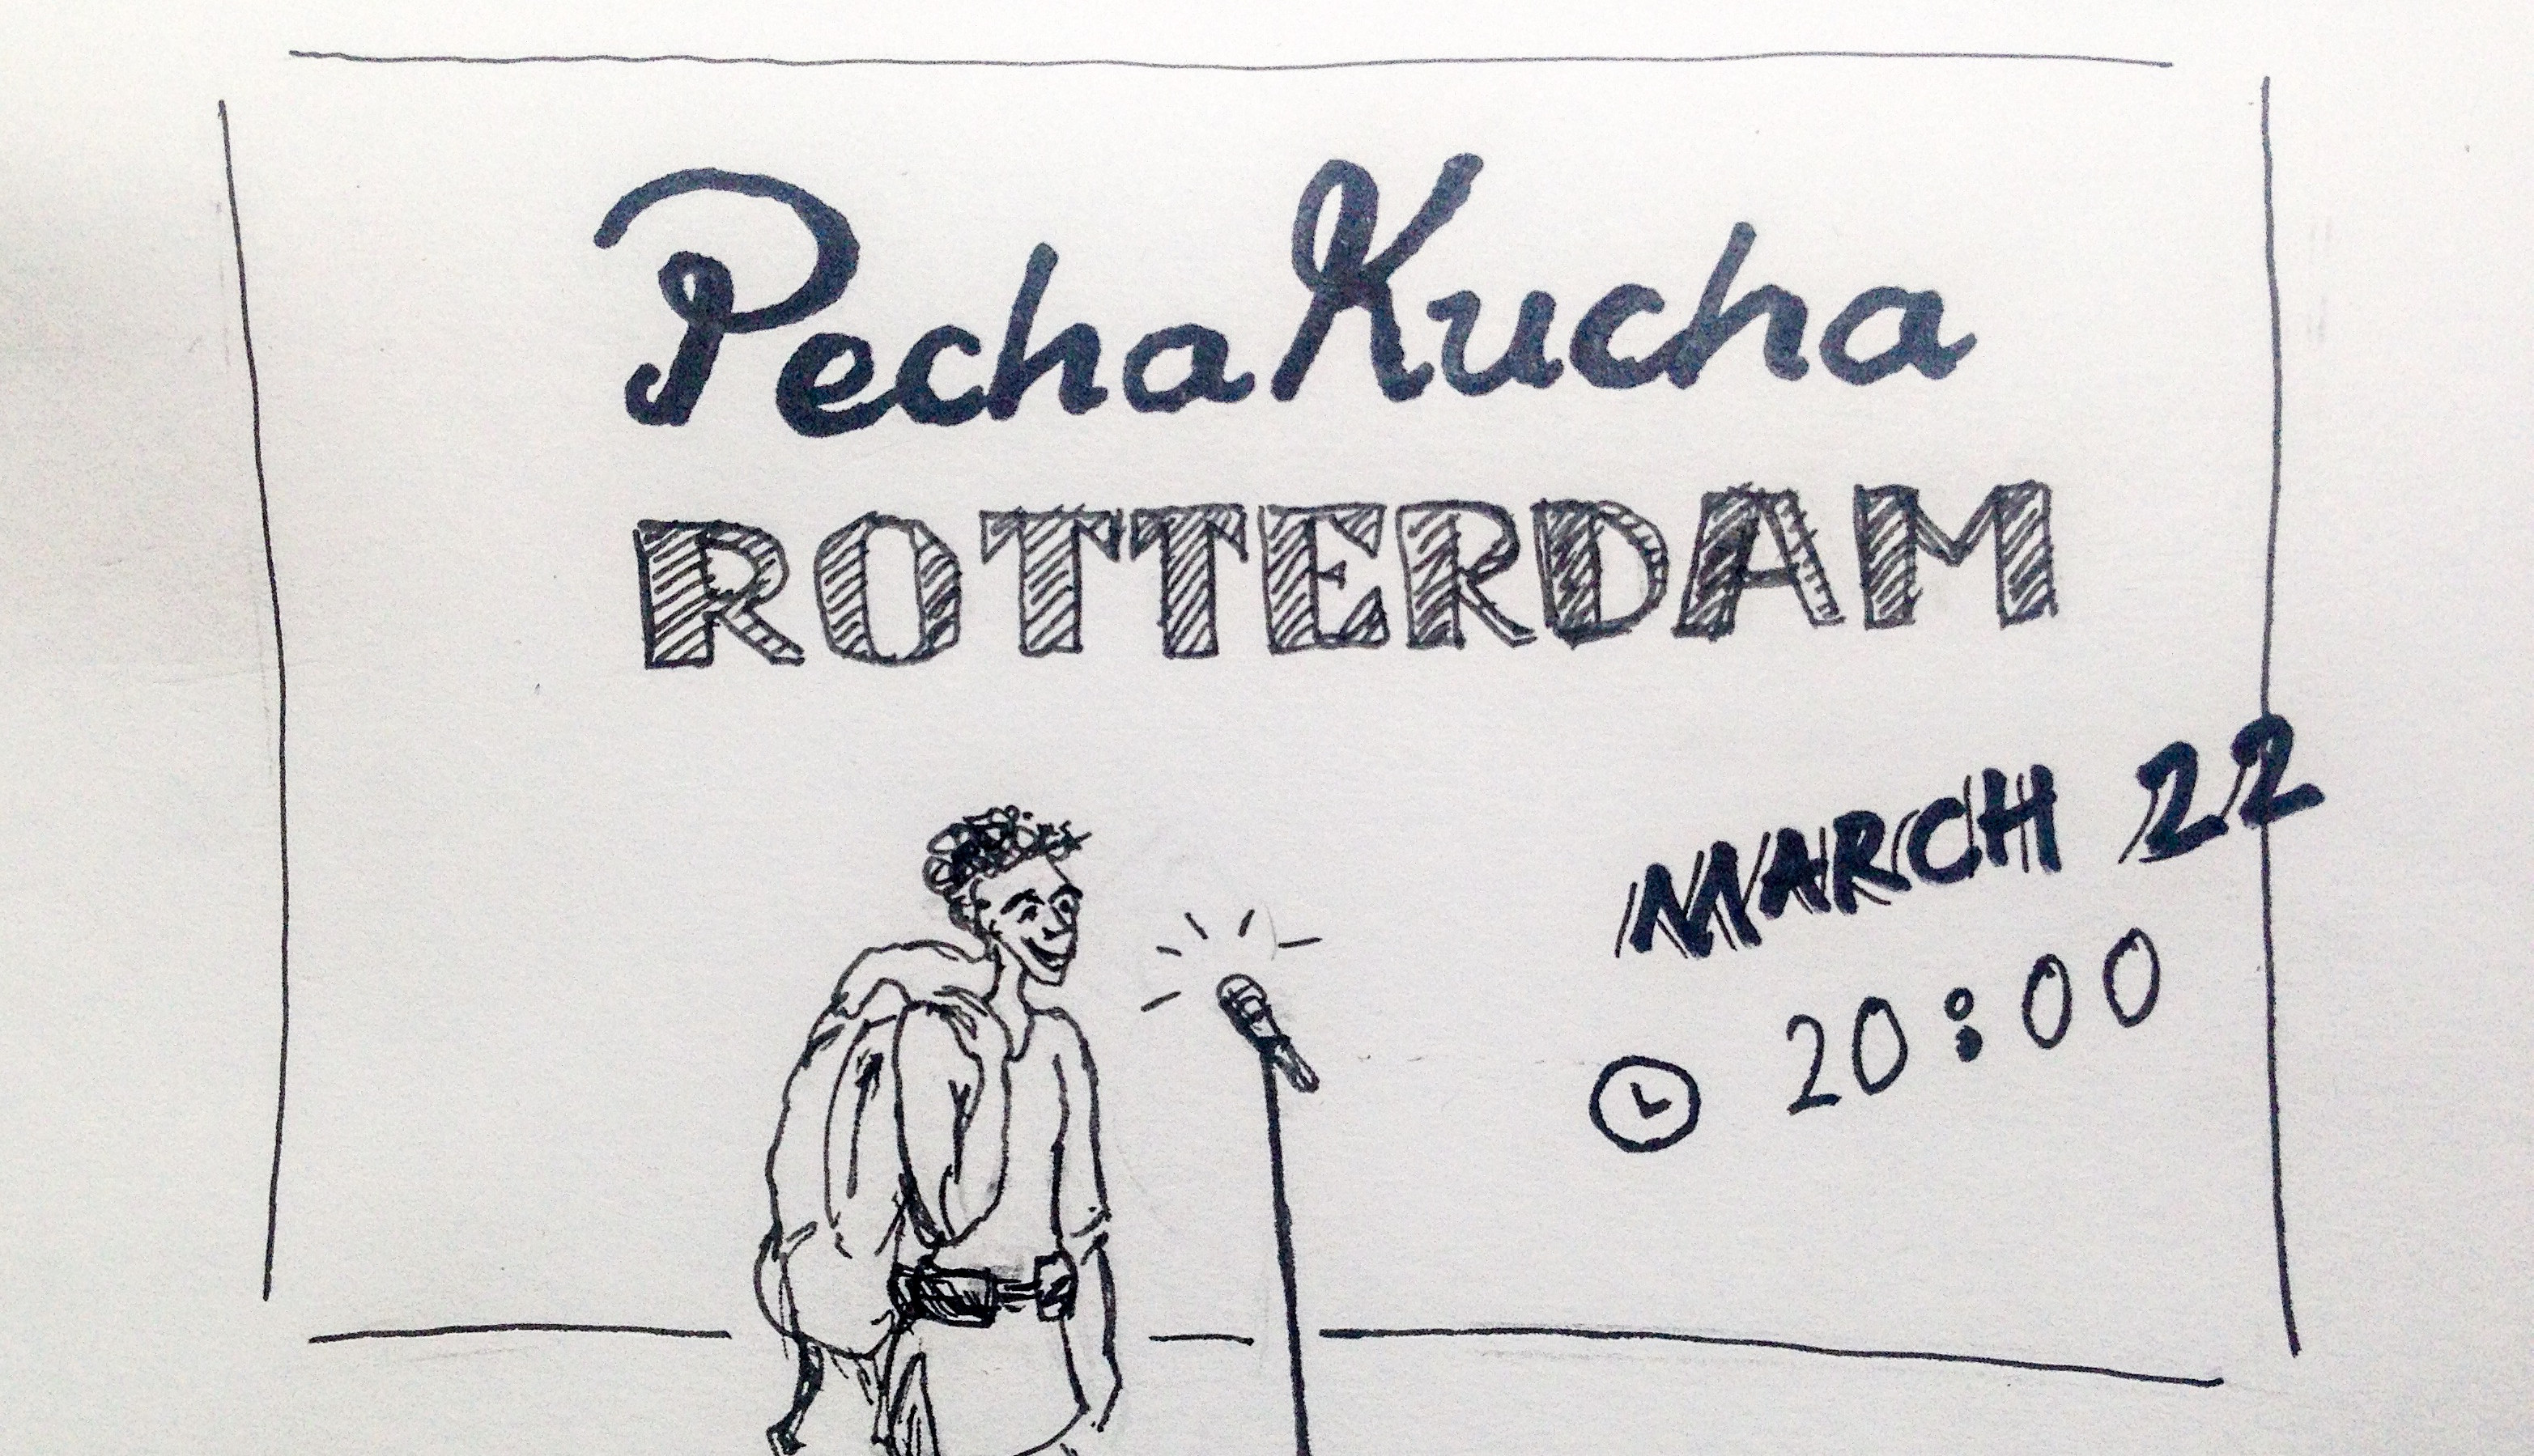 Pecha Kucha Rotterdam Netherlands Lilian Leahy inspirational speaker travel low bodget shoestring bartering trading exchange art skills illustrations sign painting march 22 2016 Arminius Museumpark